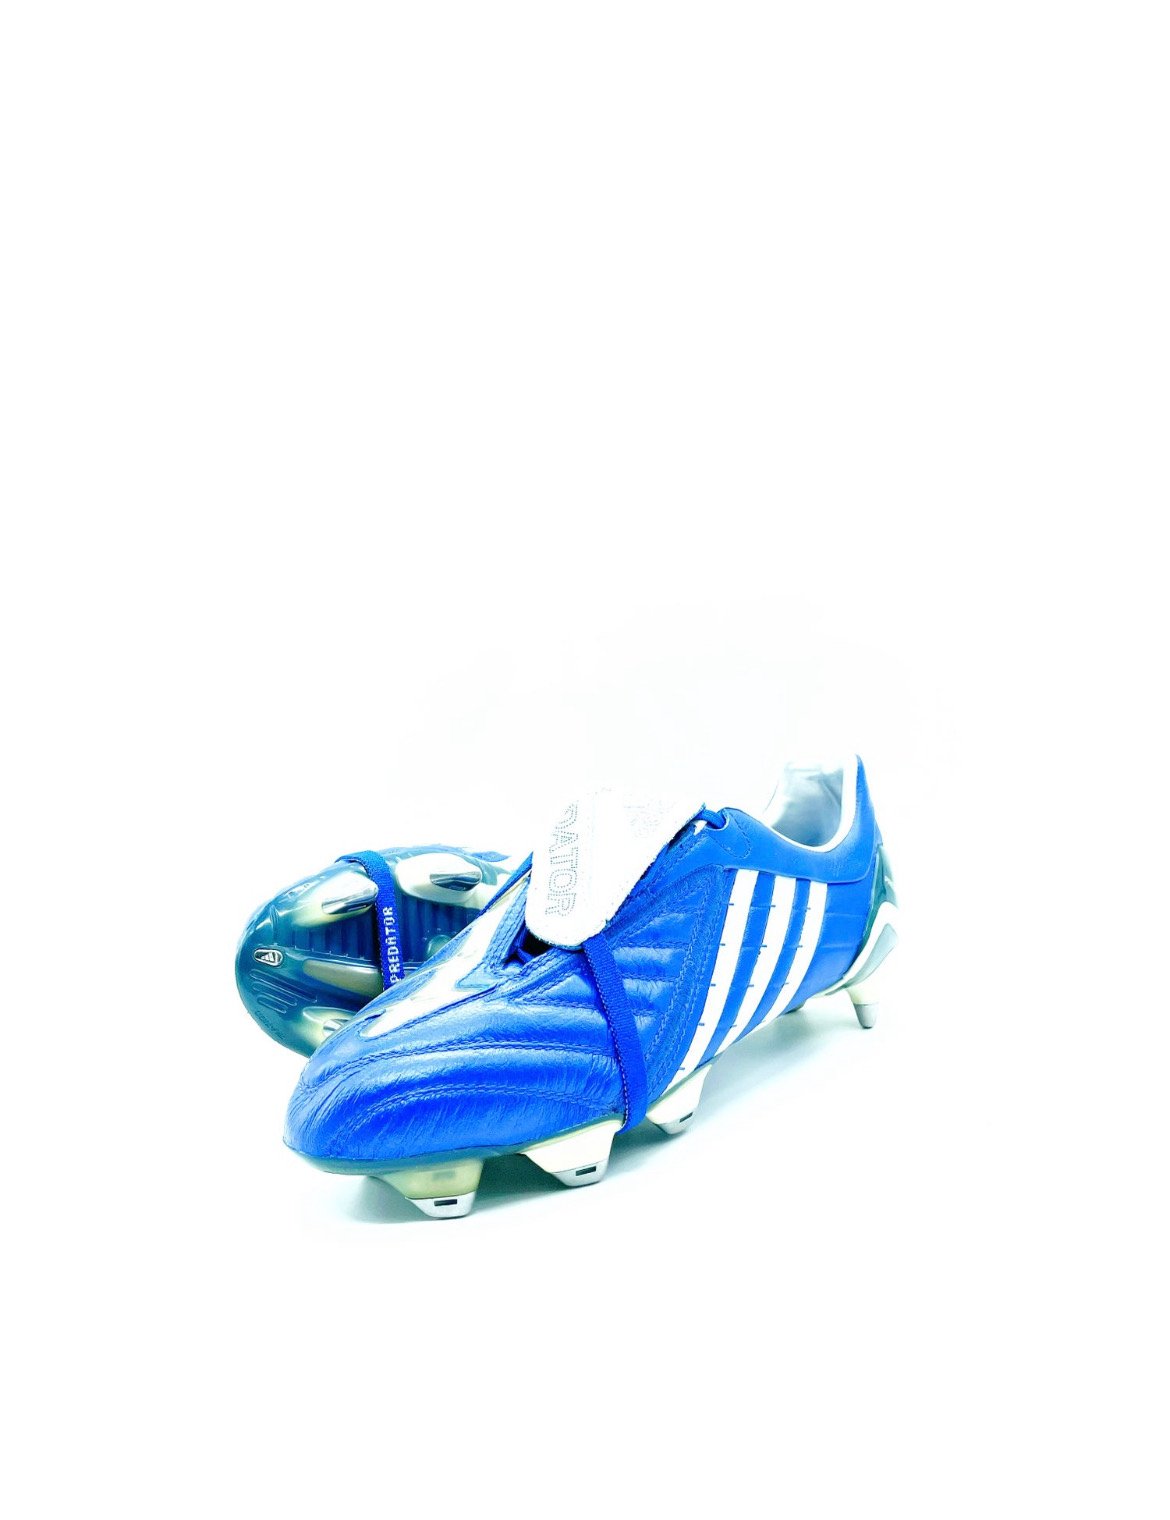 Image of Adidas Predator powerswerve Blue SG 